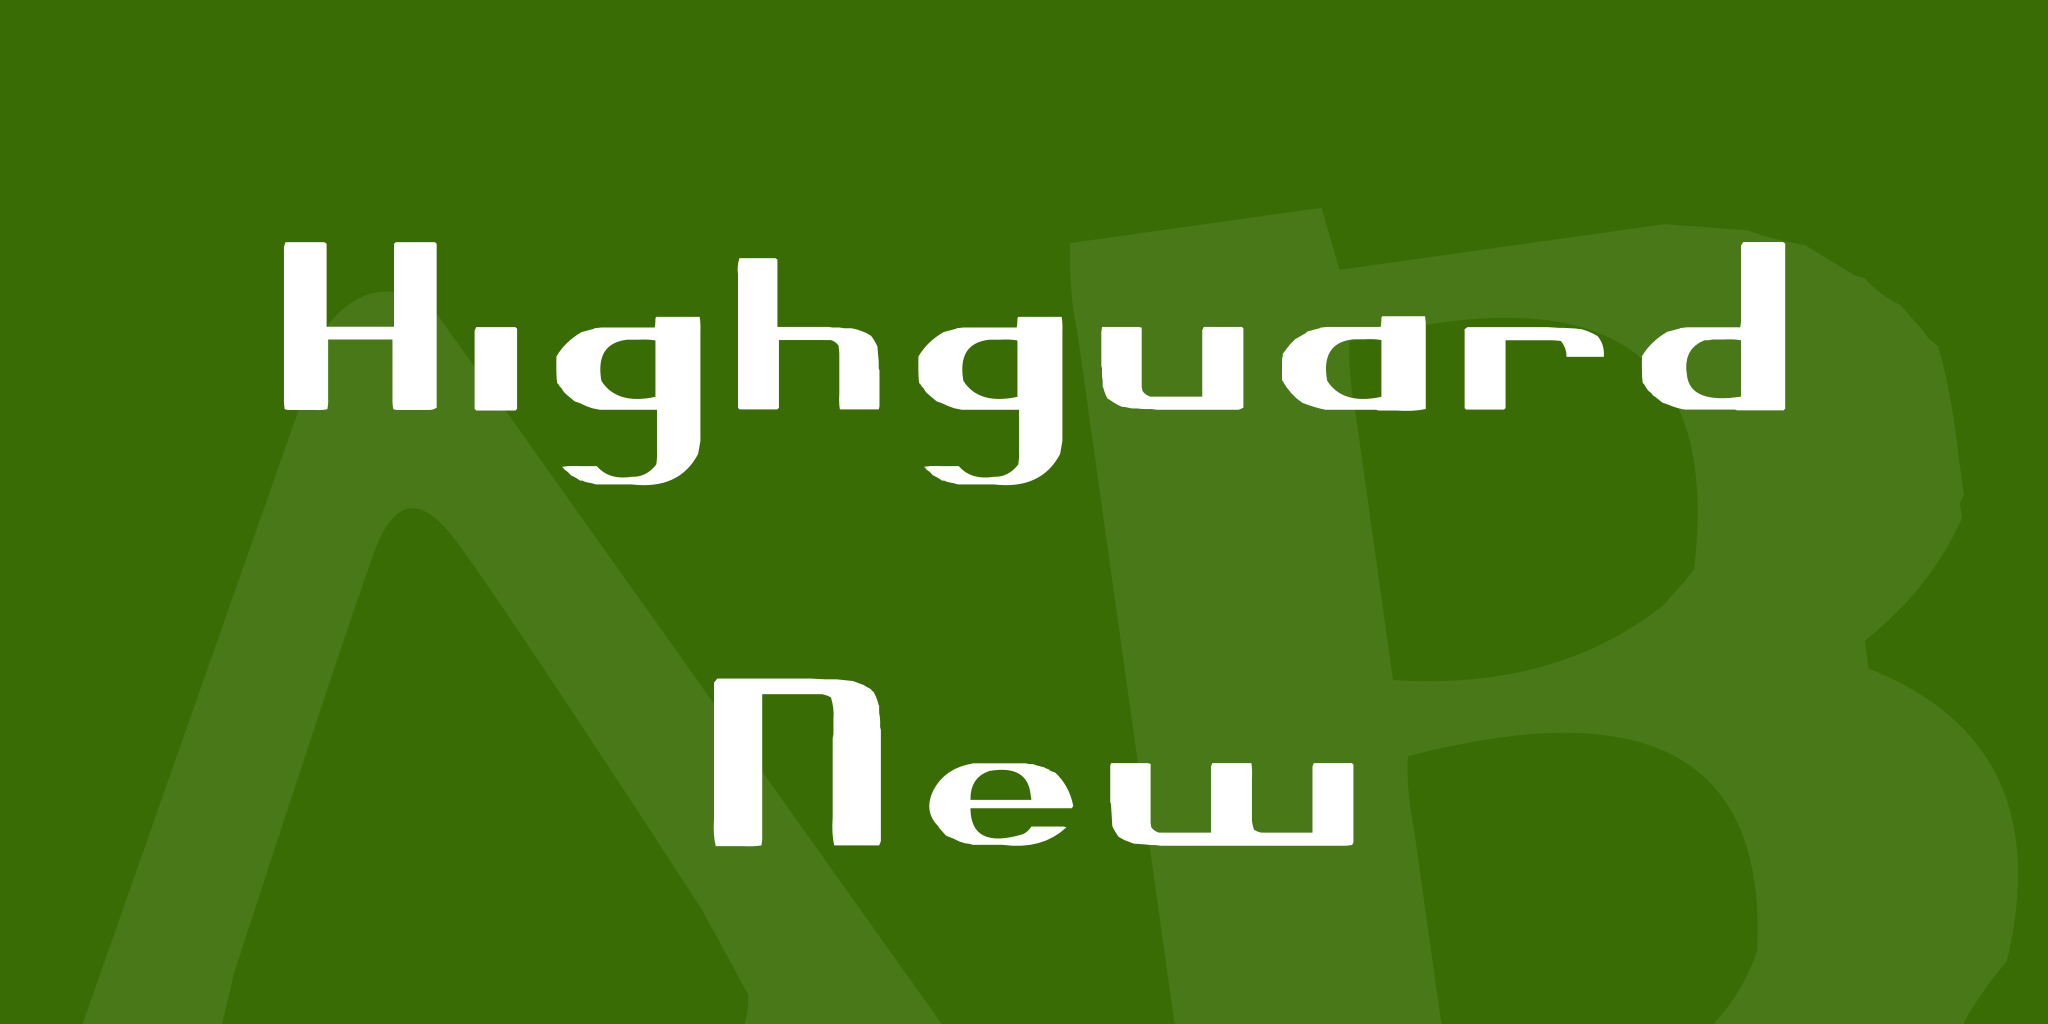 Highguard New